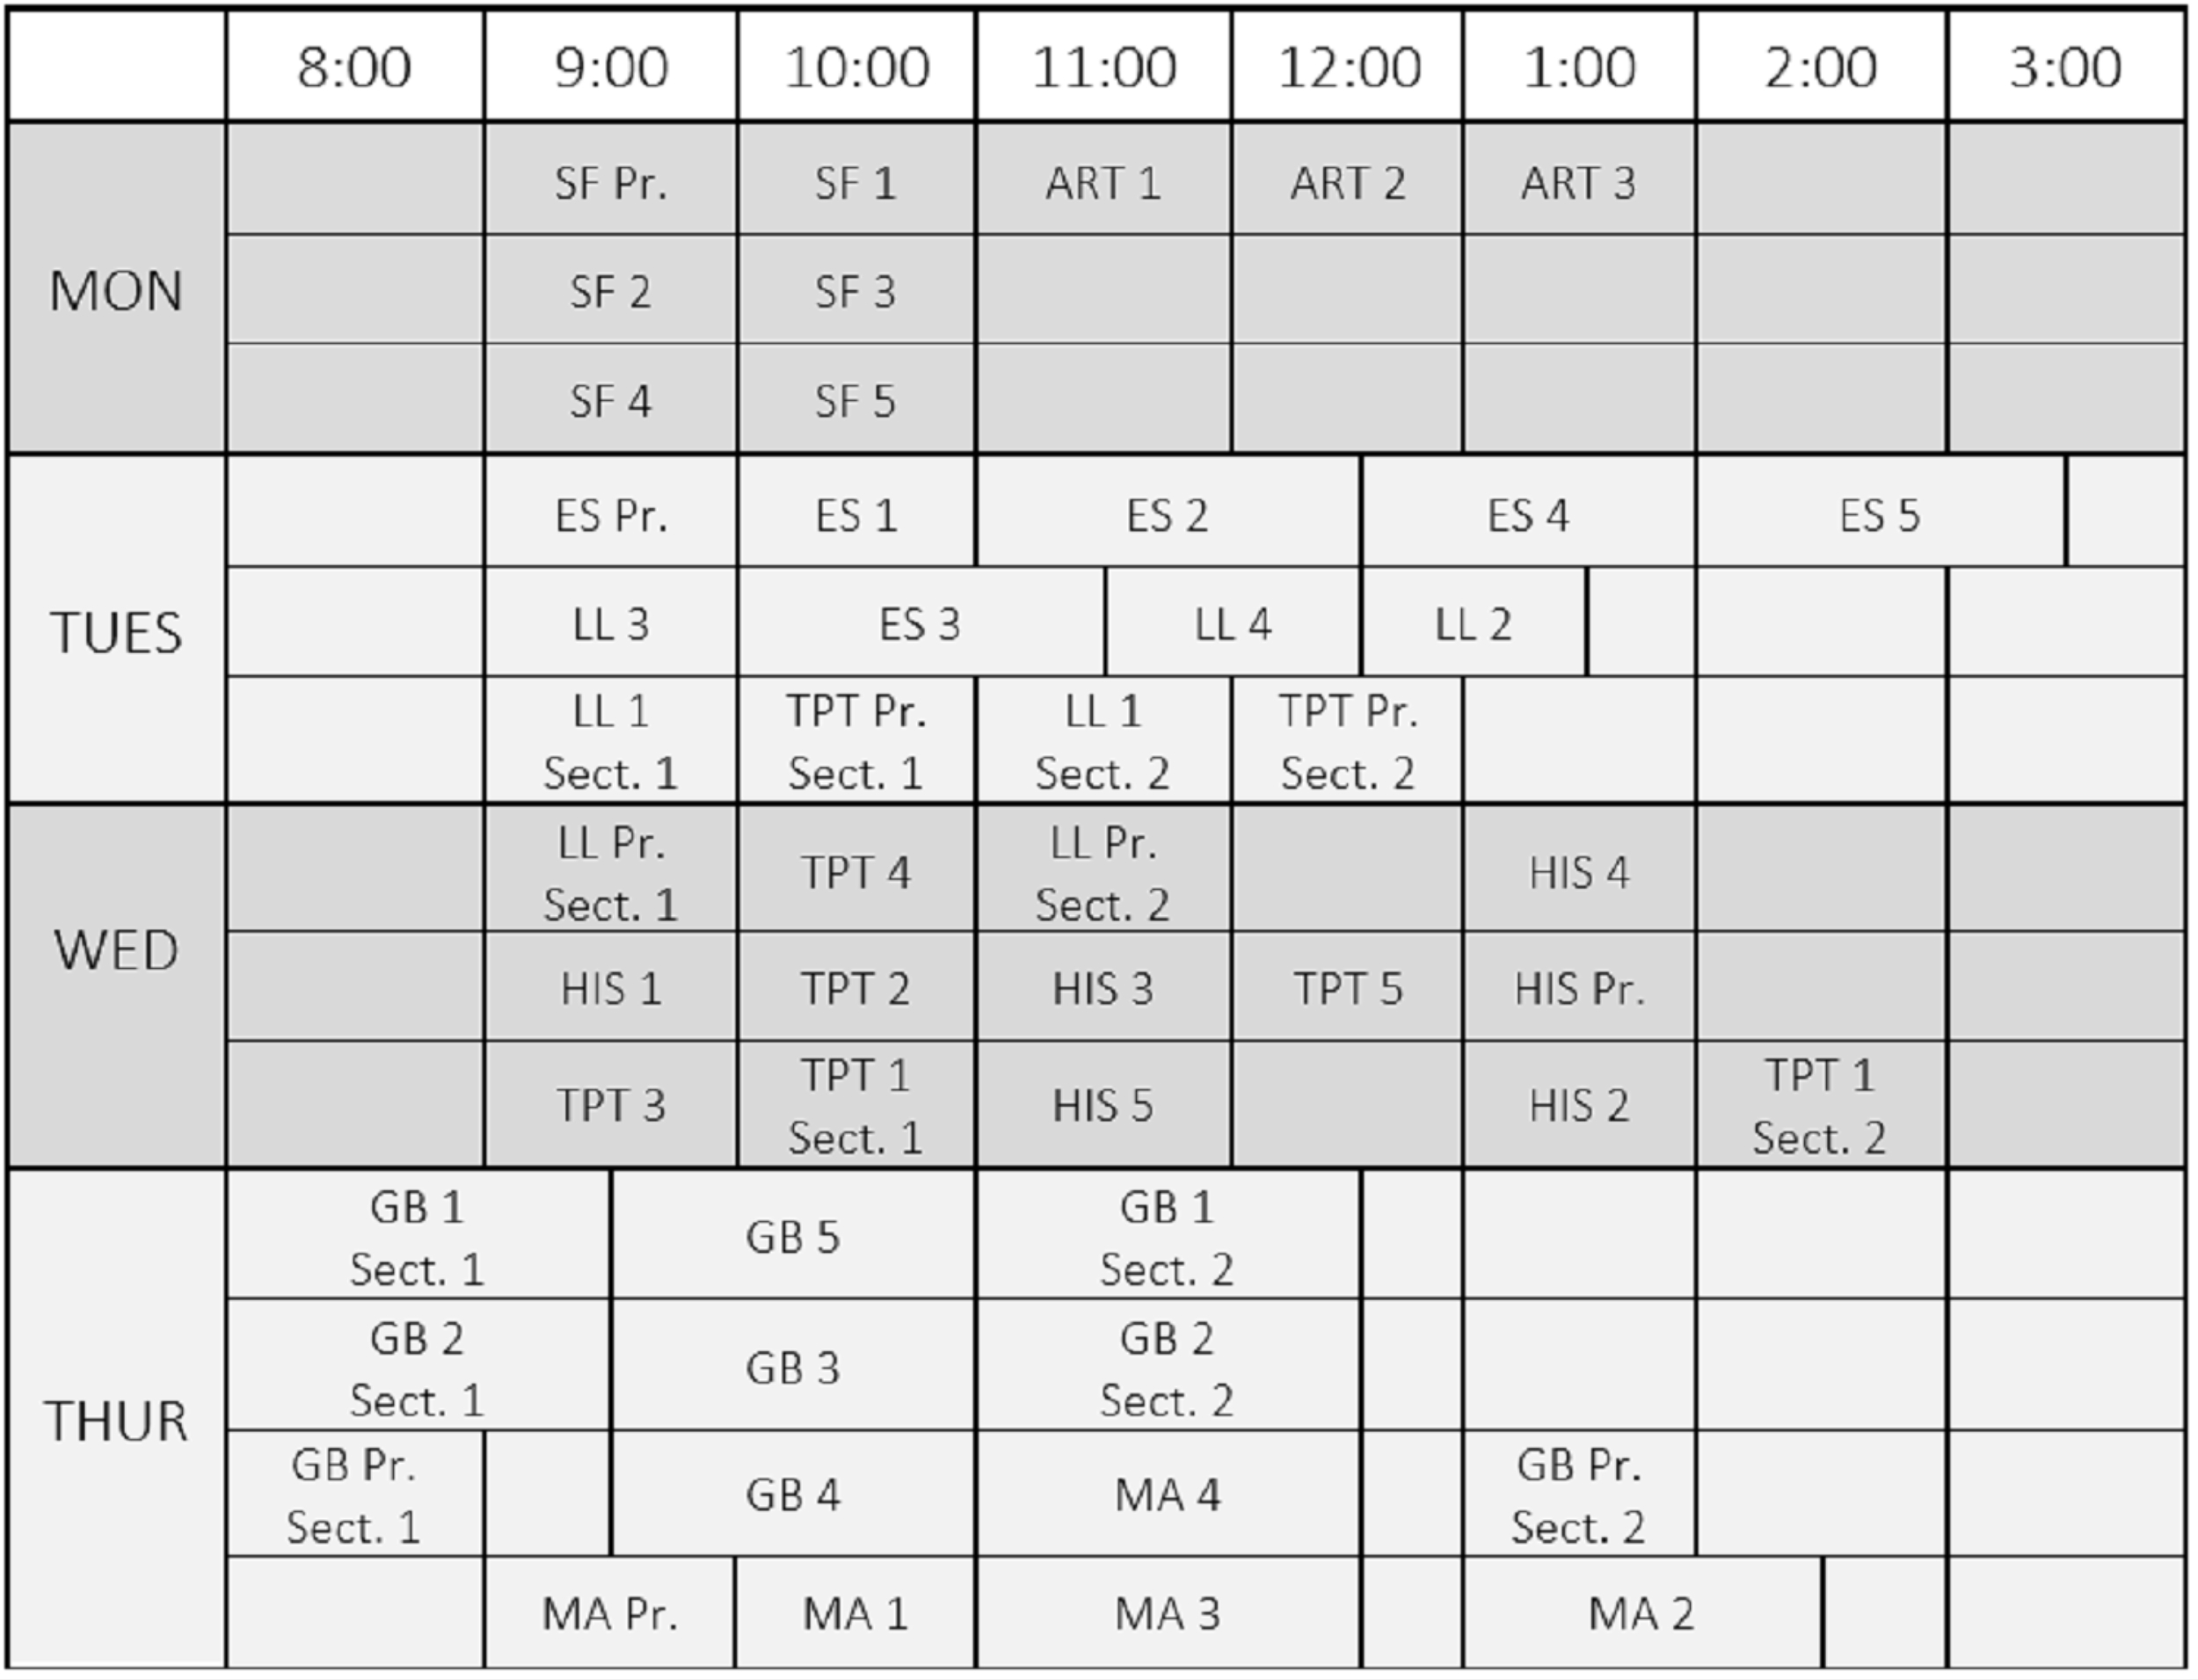 22-23 academic schedule image large